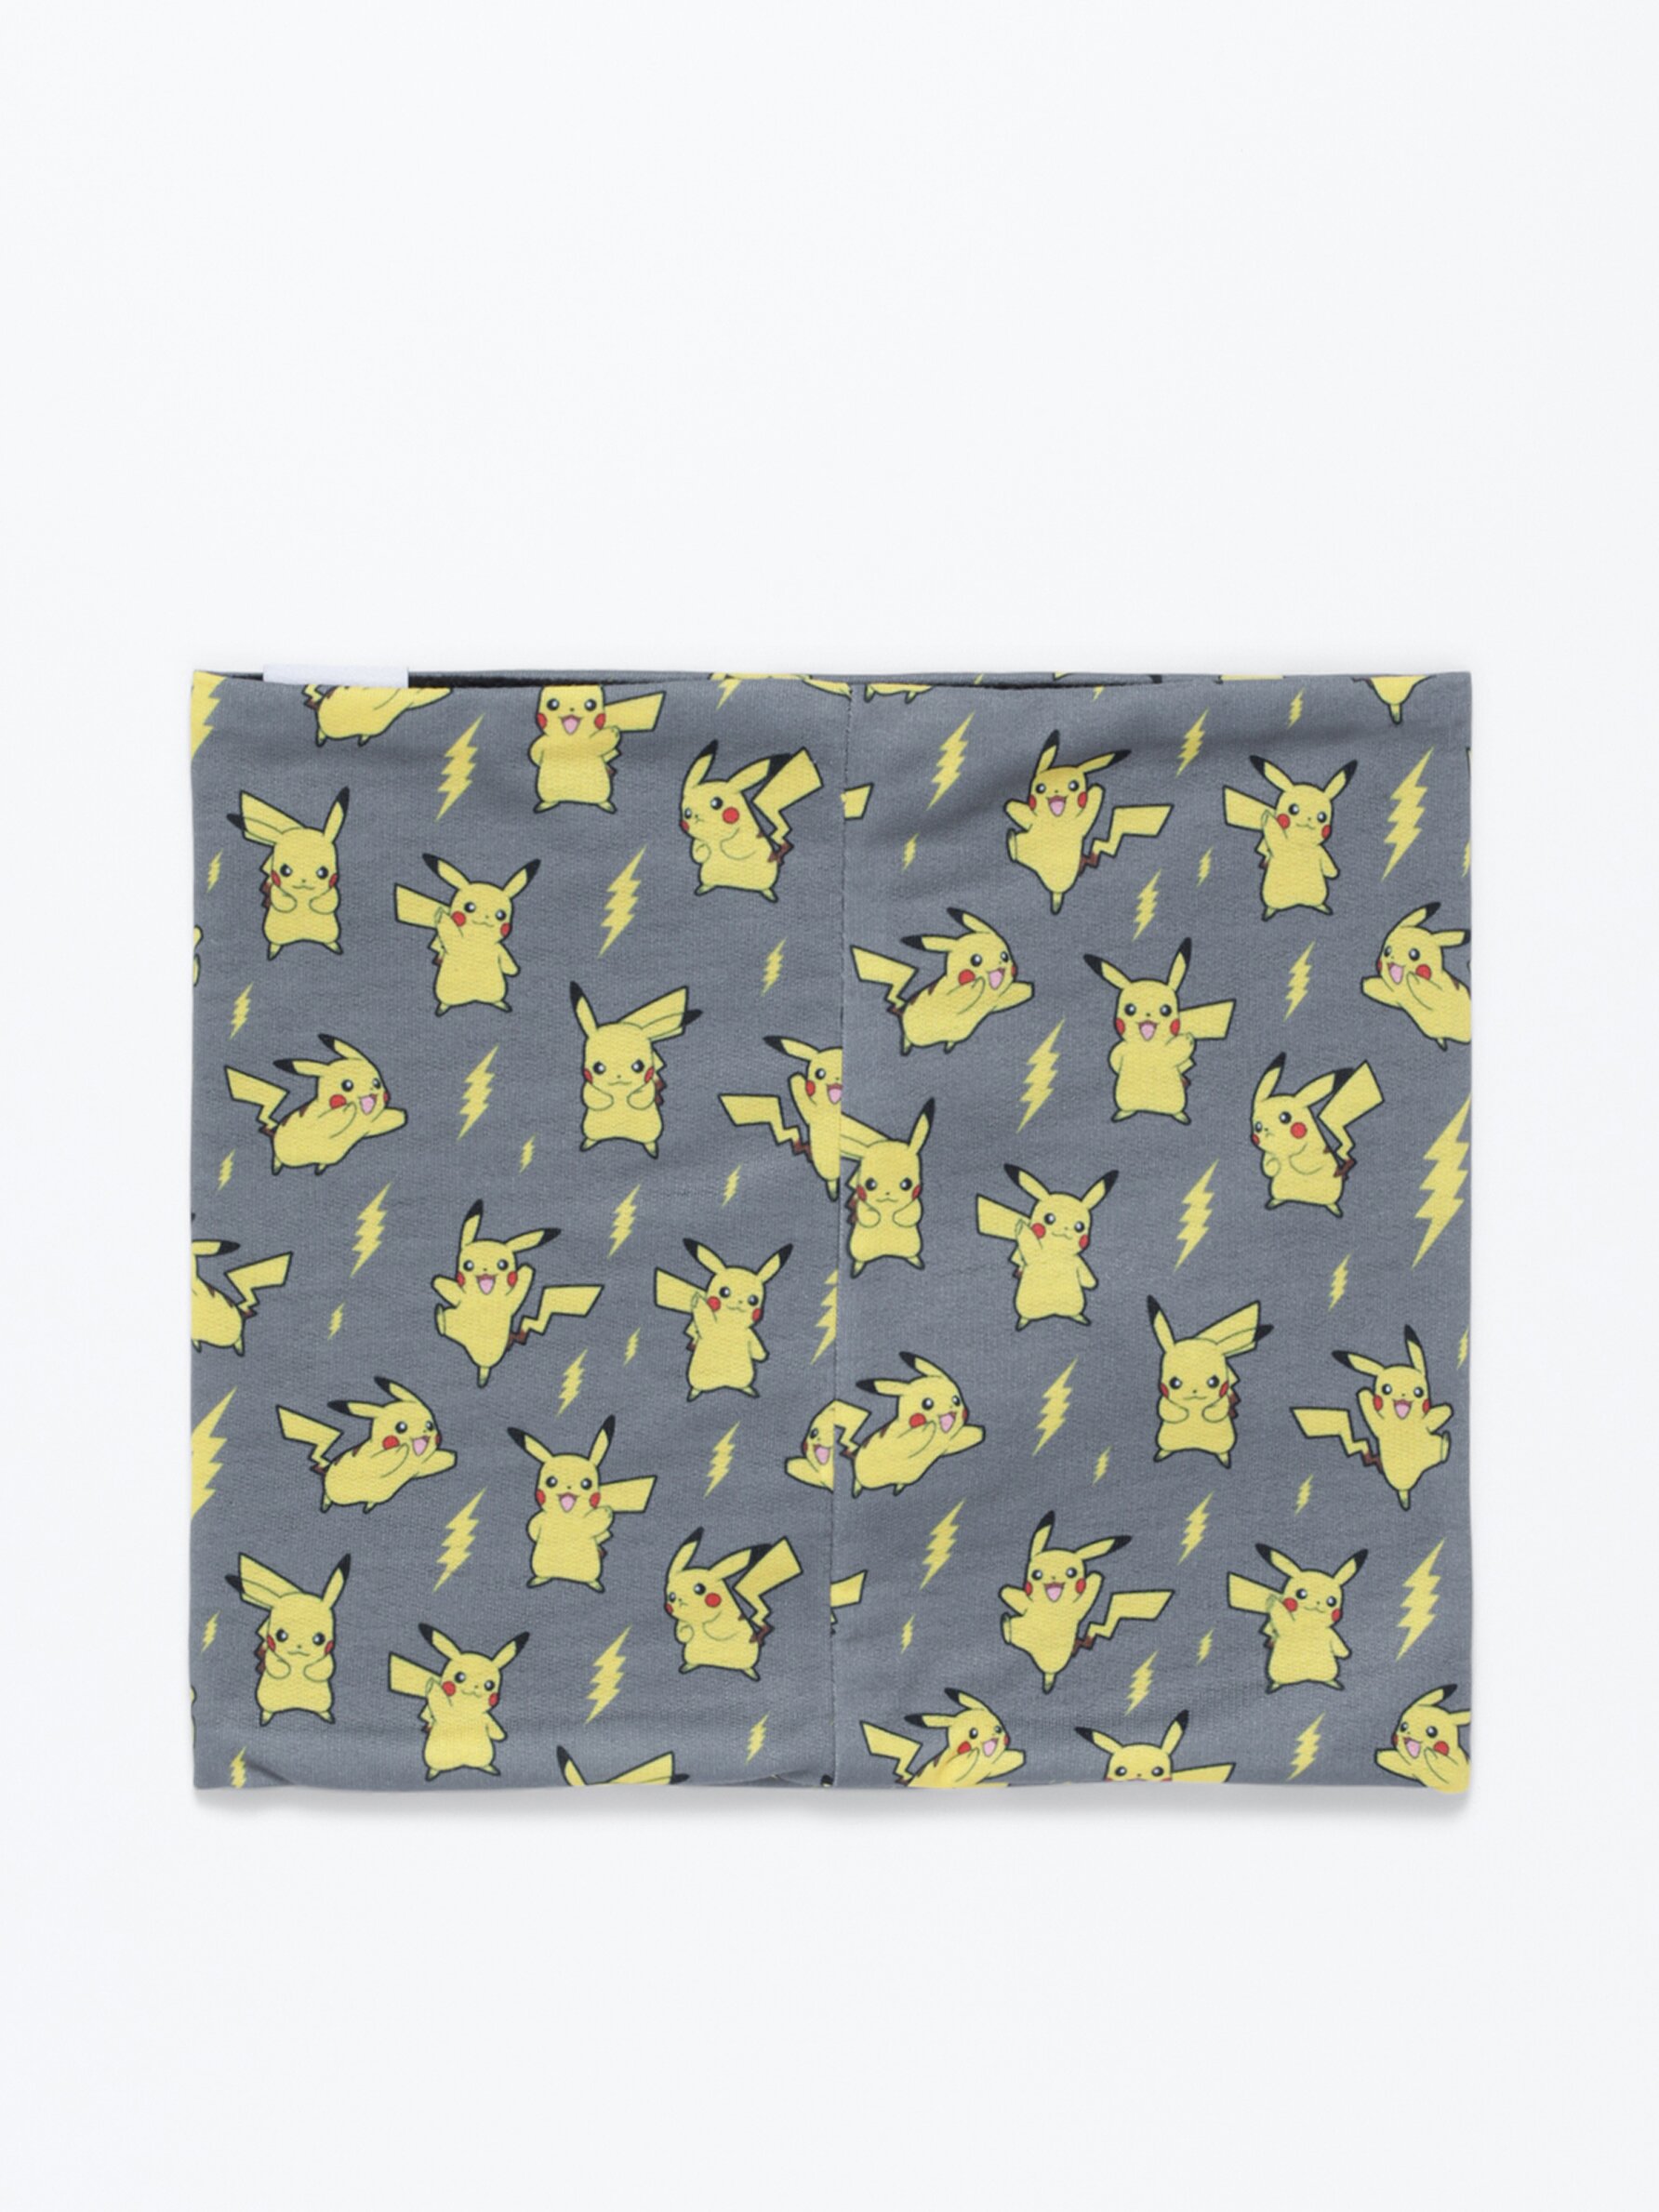 comprar Fato Pokémon™ Pikachu Infantil